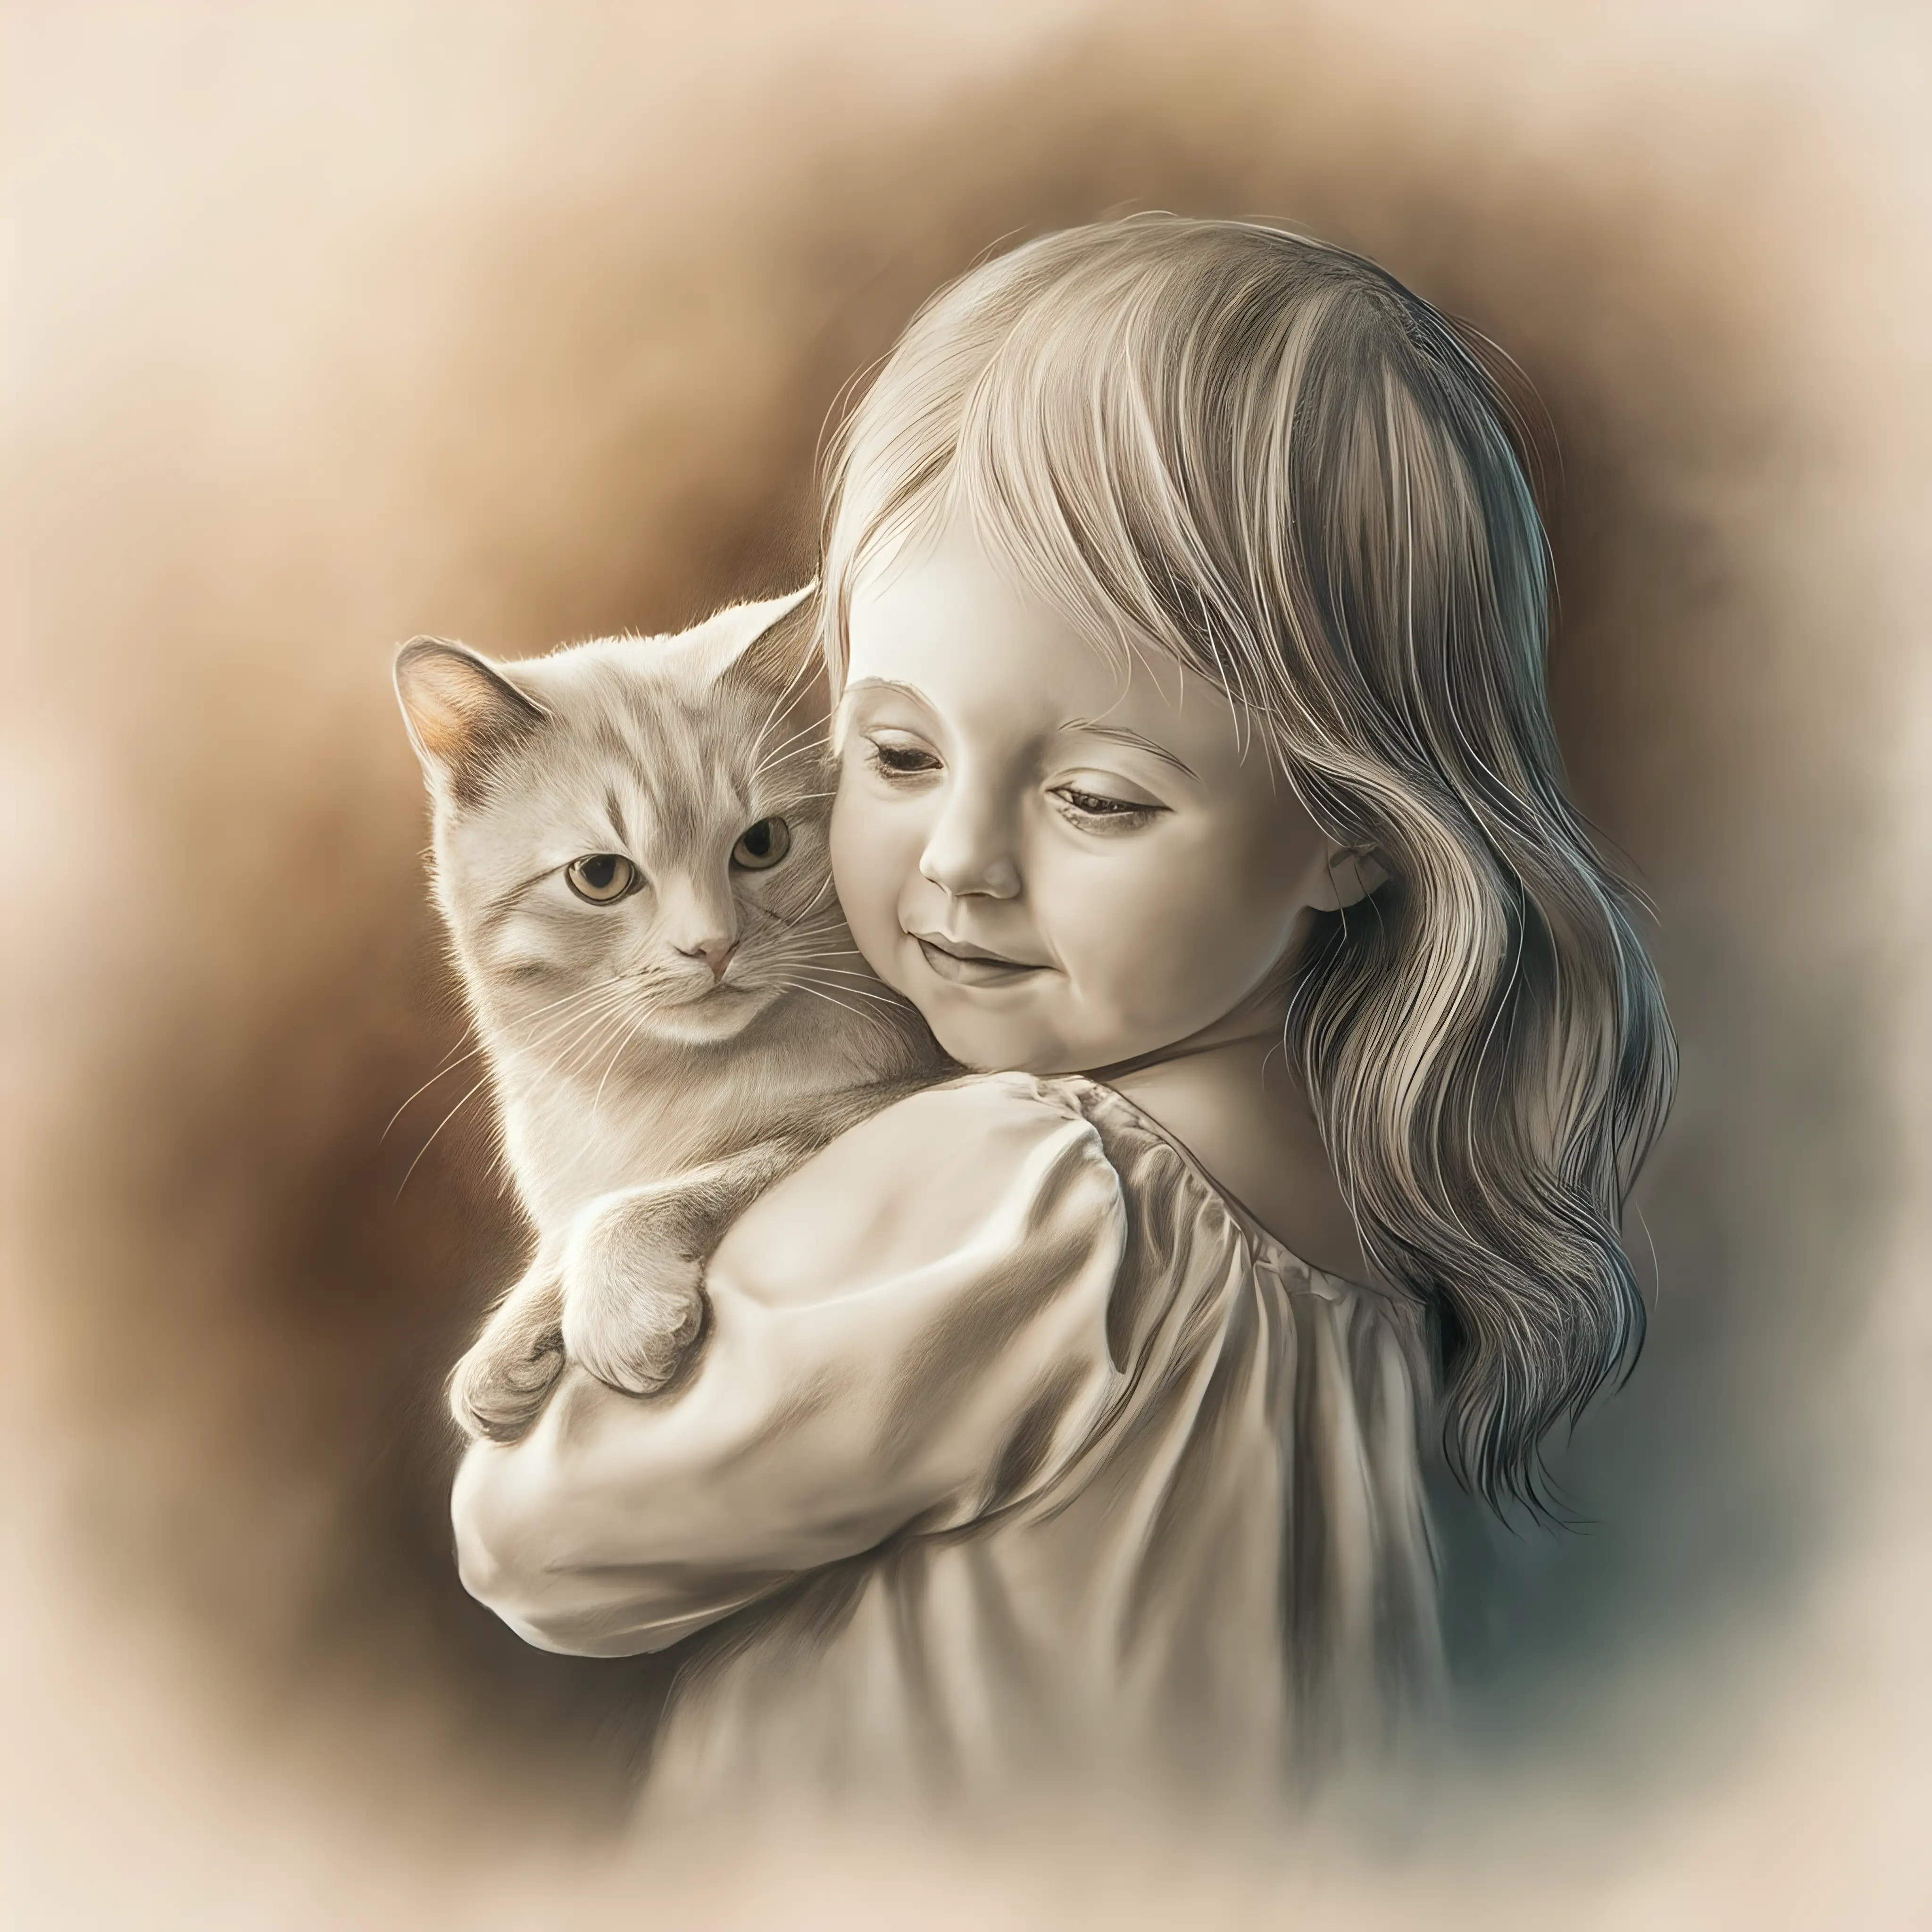 Adorable Little Girl Holding a Playful Cat Heartwarming Pencil Sketch